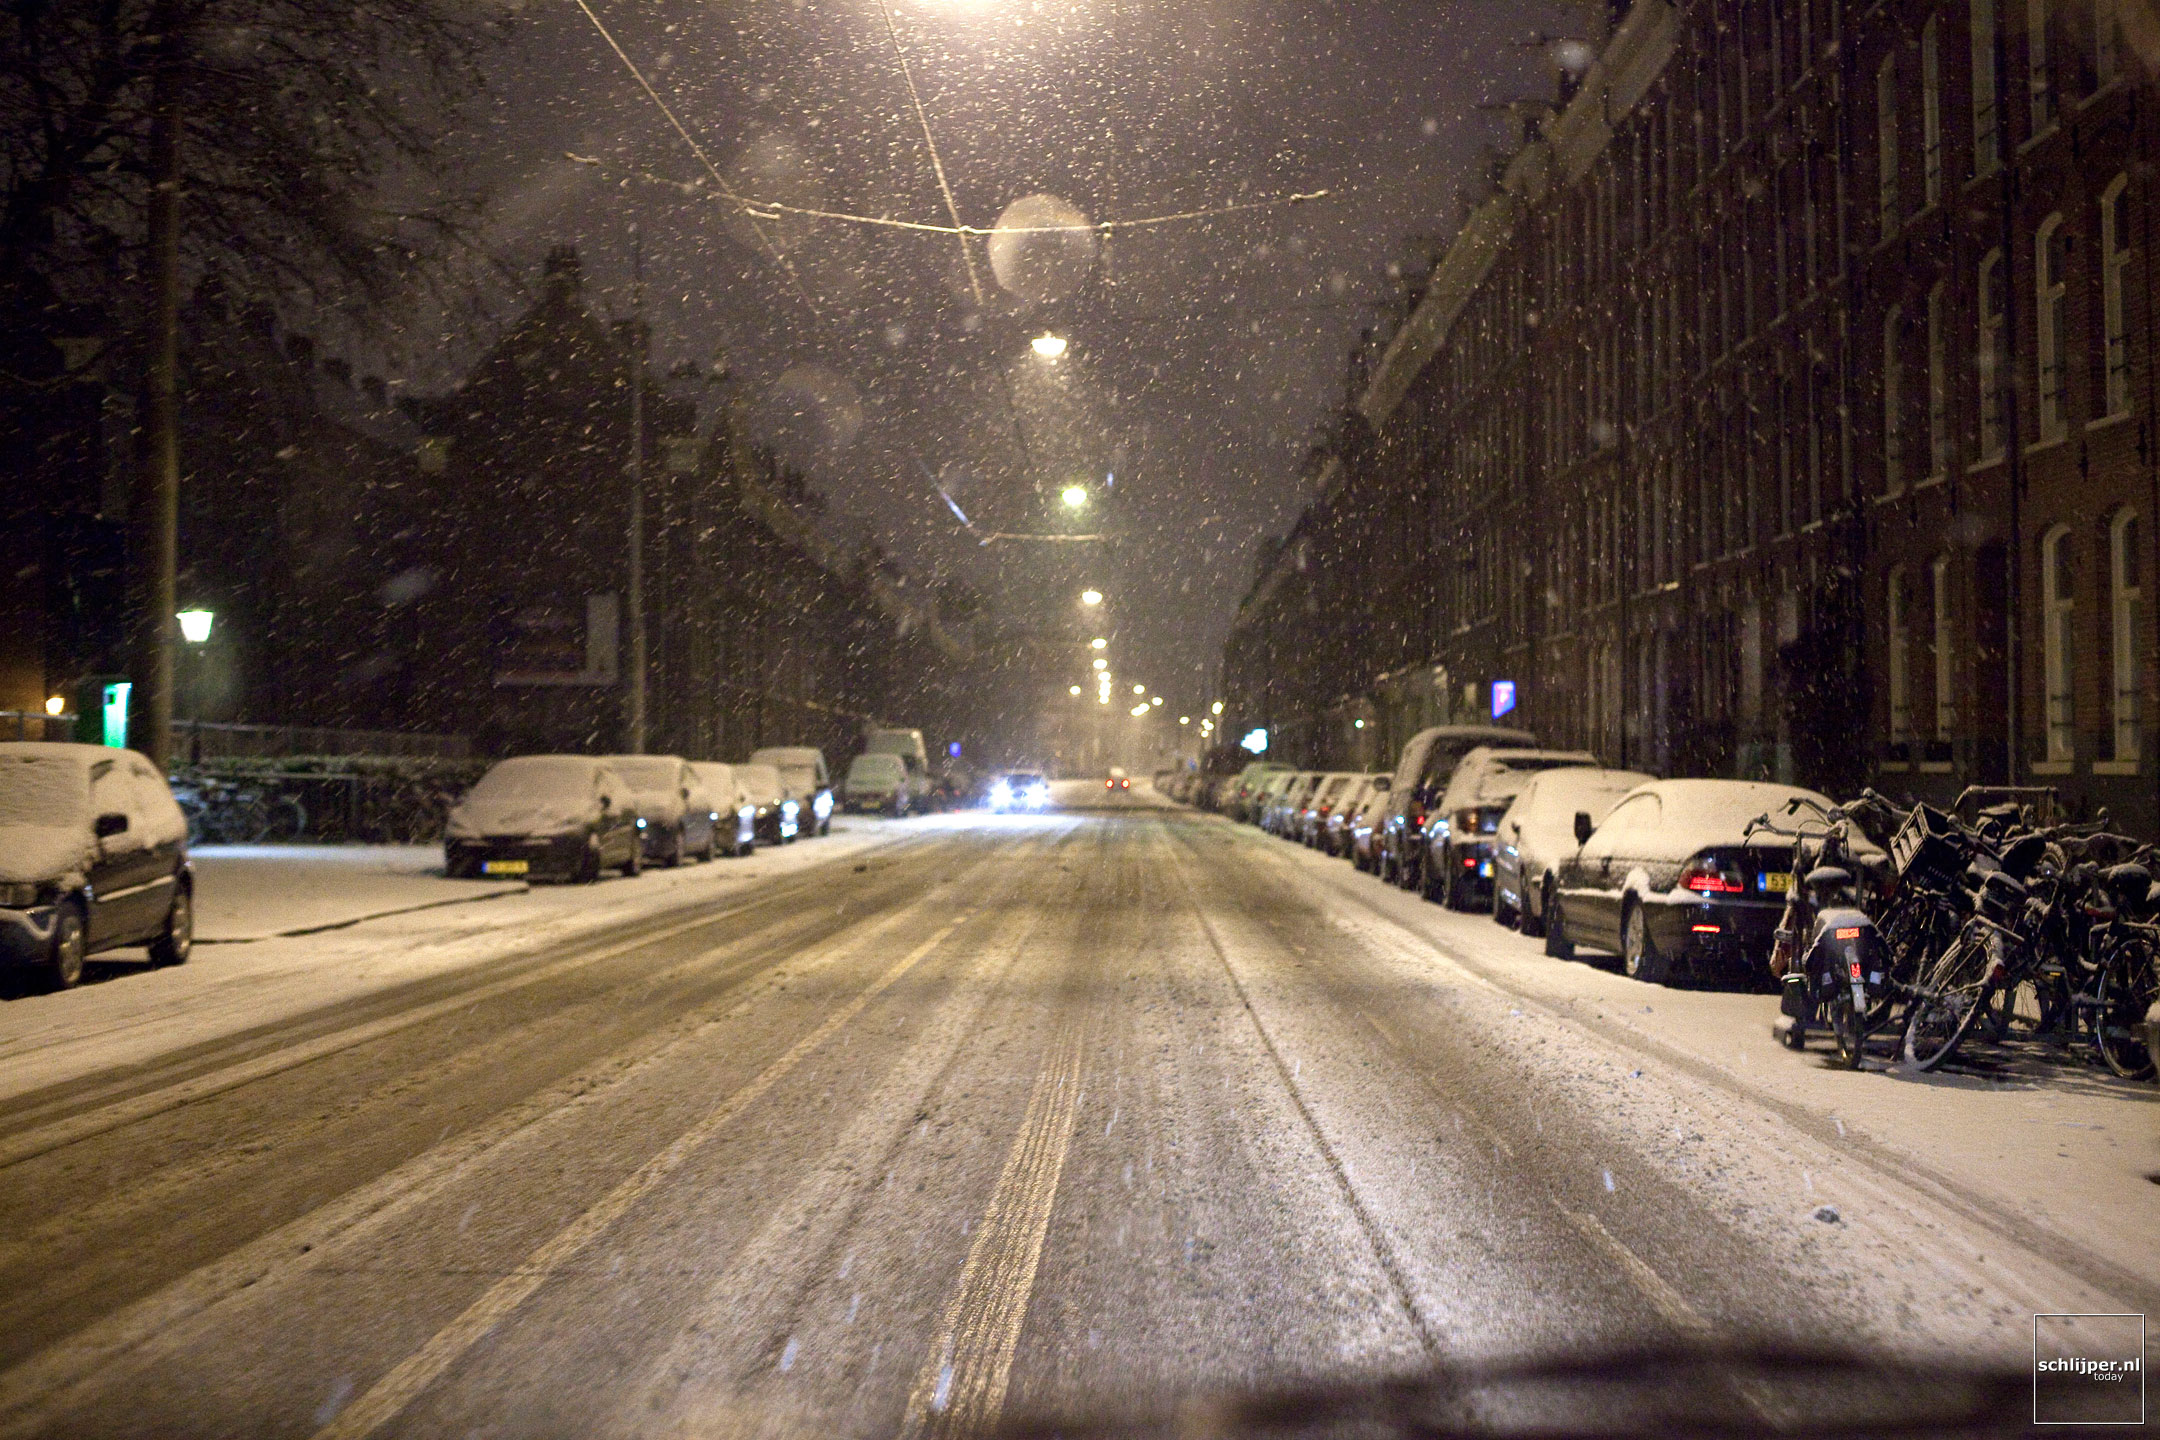 Nederland, Amsterdam, 29 december 2009